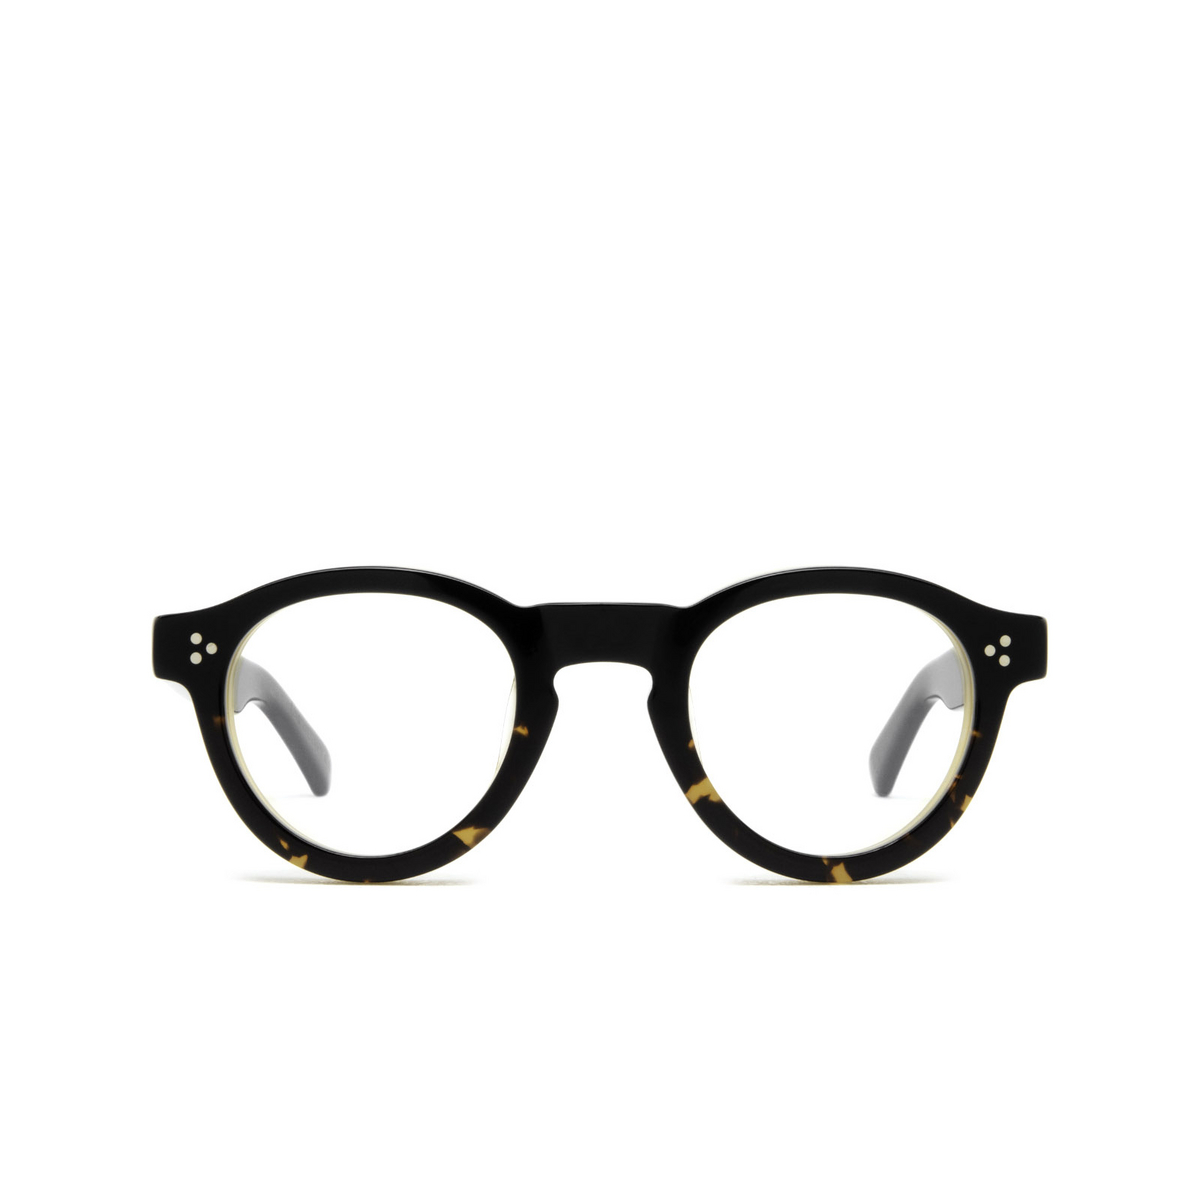 Lesca GASTON Eyeglasses A1 Tortoiseshell / Beige - front view